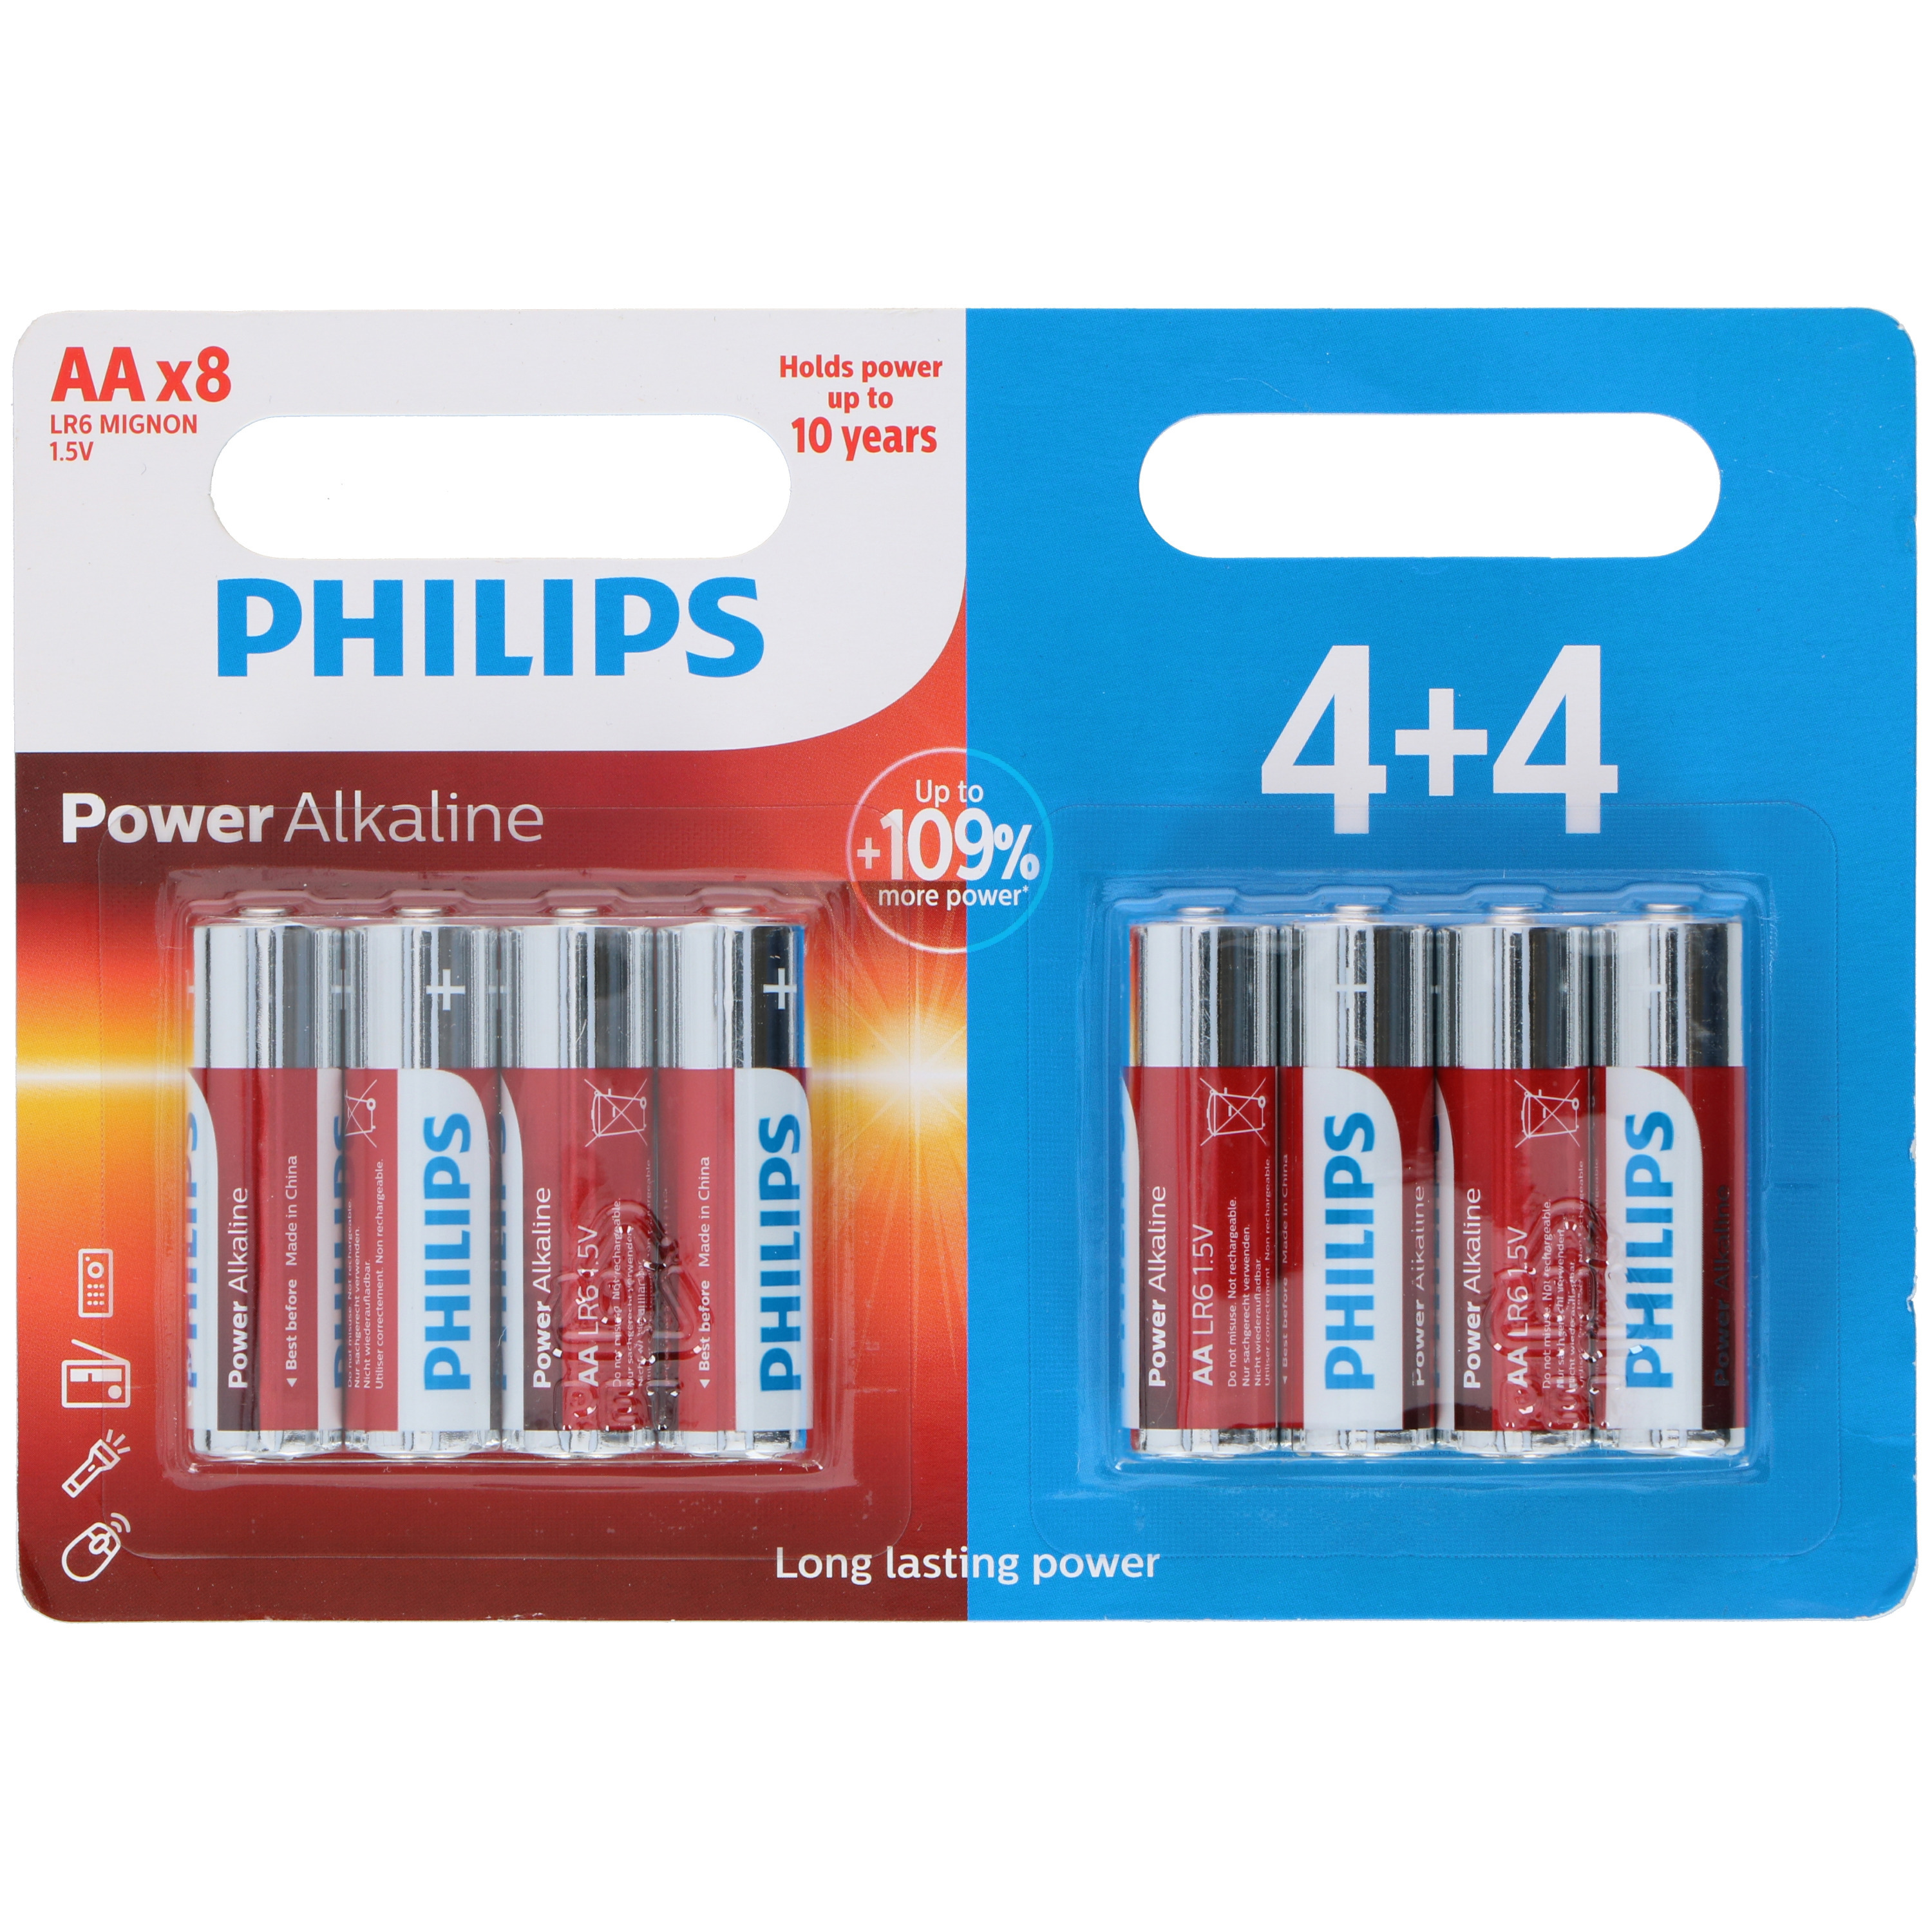 24x Philips AA batterijen